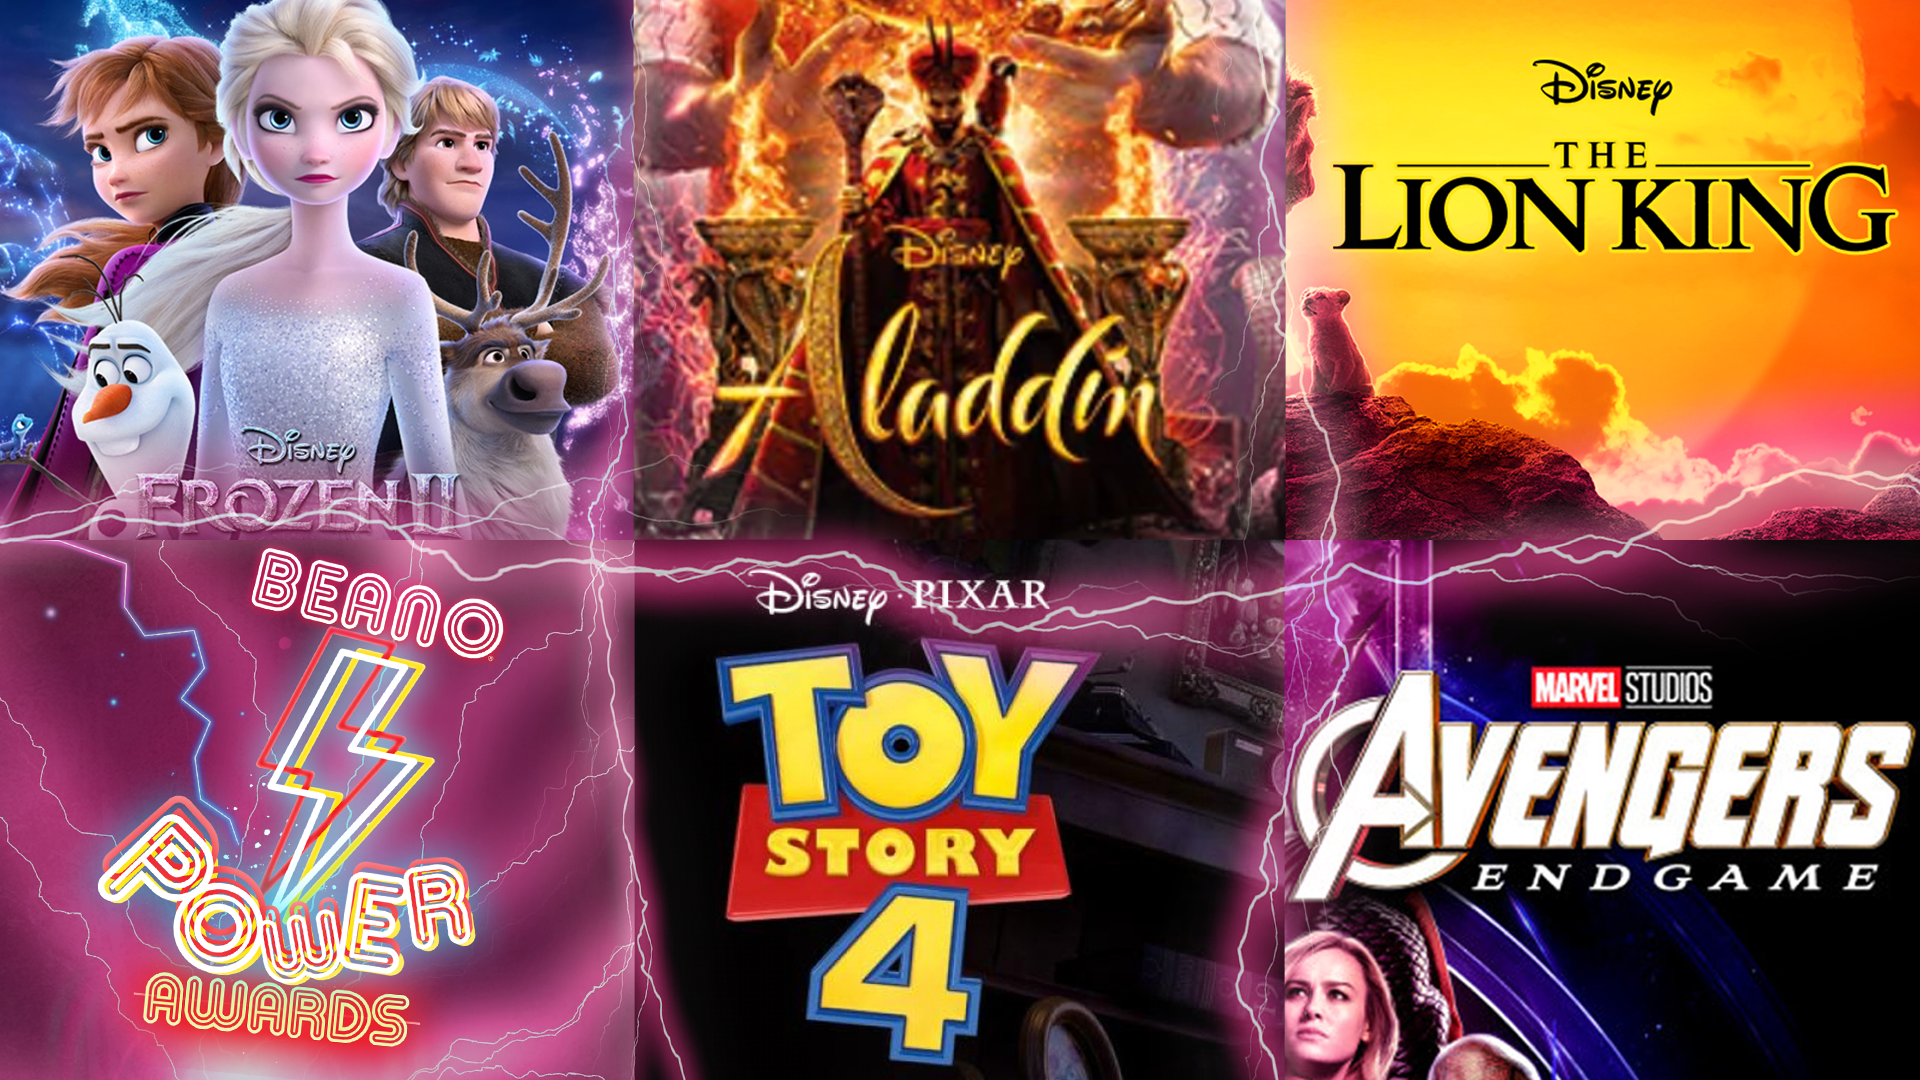 Frozen 2, Aladdin, The Lion King, Beano Power Awards, Toy Story 4, Avengers: Endgame